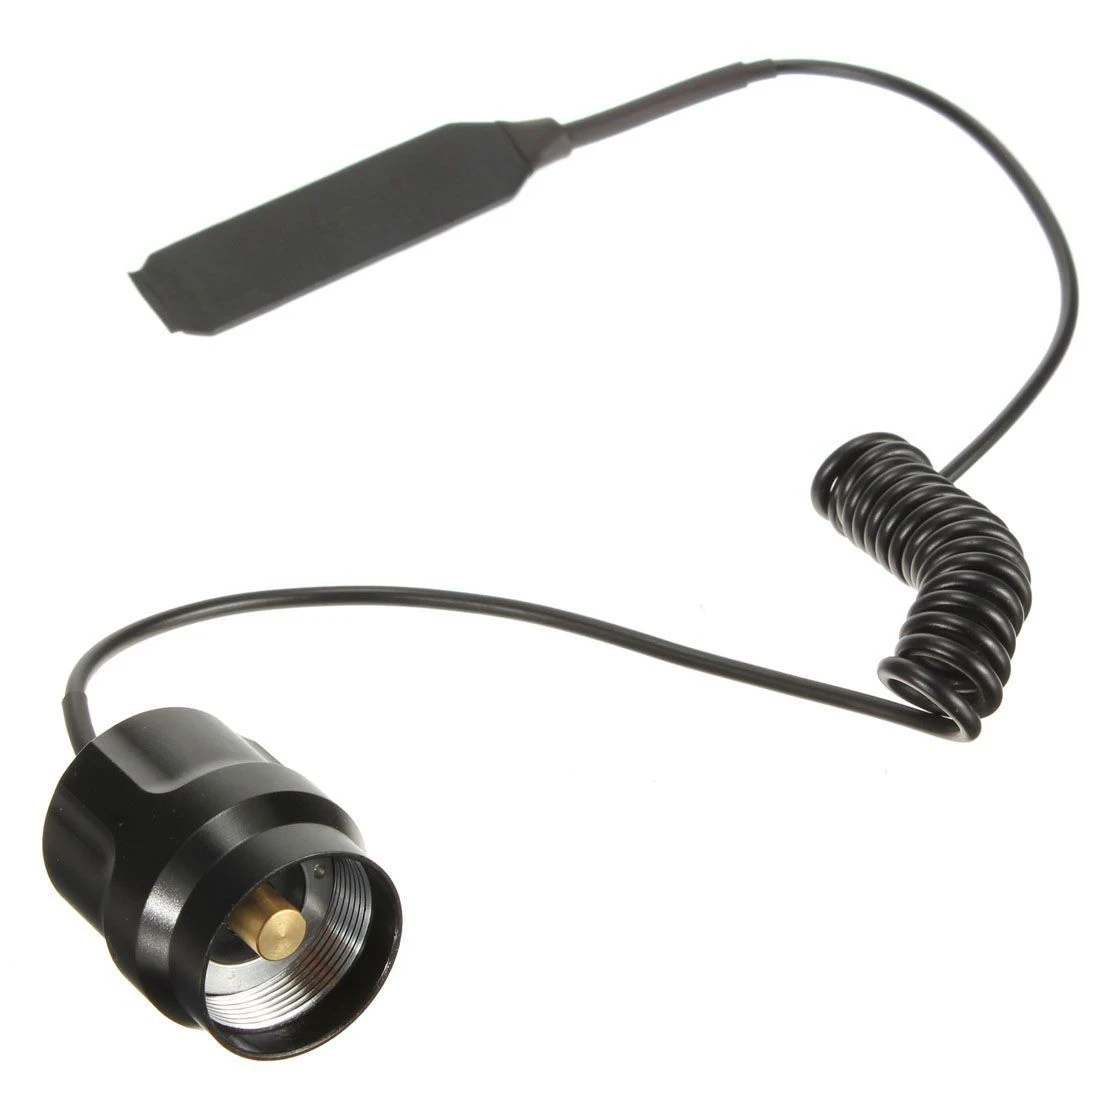 

Remote Control Remote Pressure Switch for Ultrafire C8 504B LED Flashlight Lamp